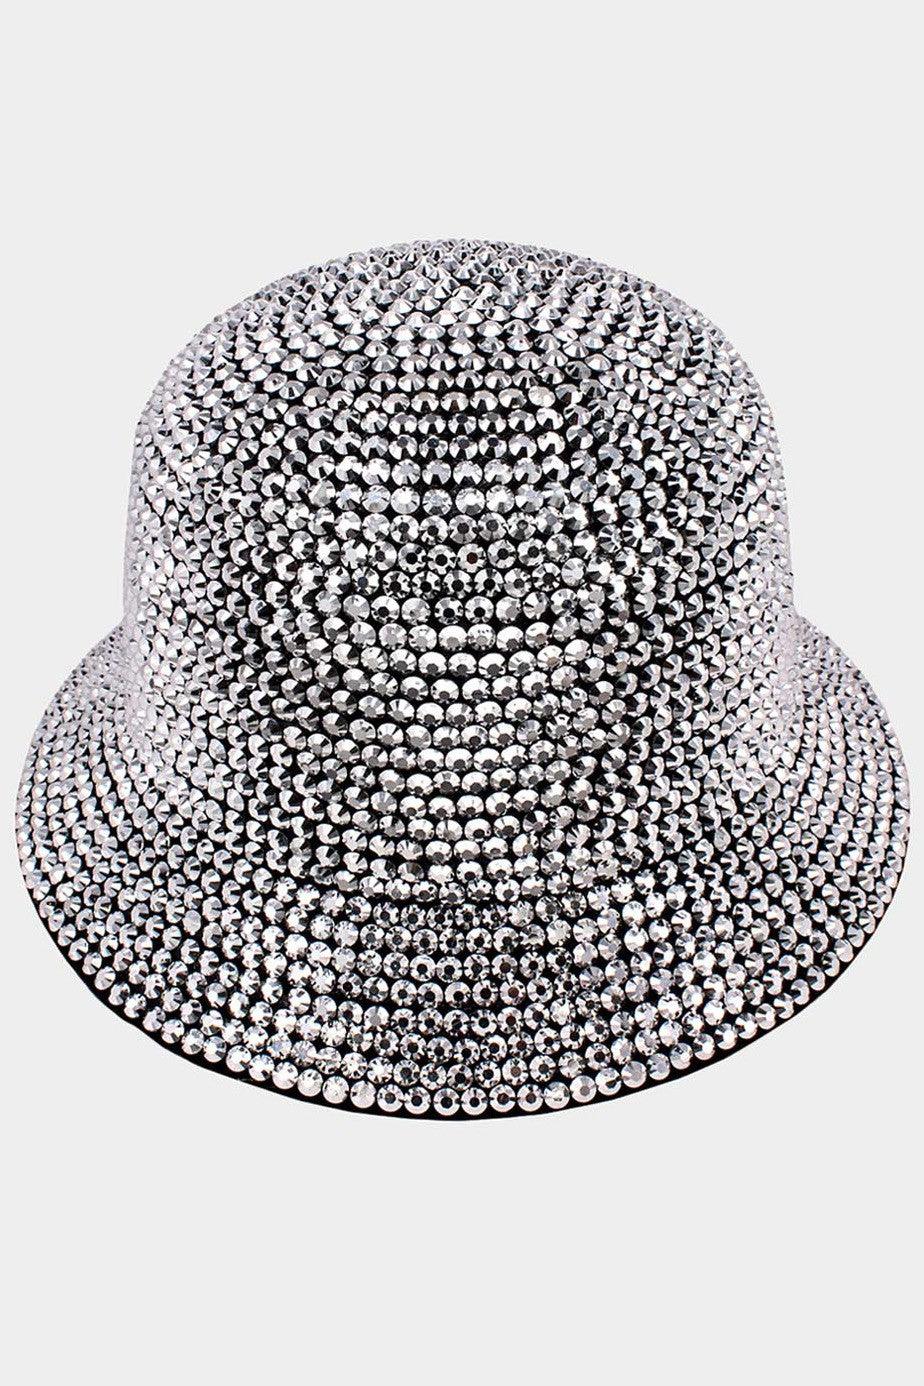 Rhinestone Bucket Hat - Mint Leafe Boutique 